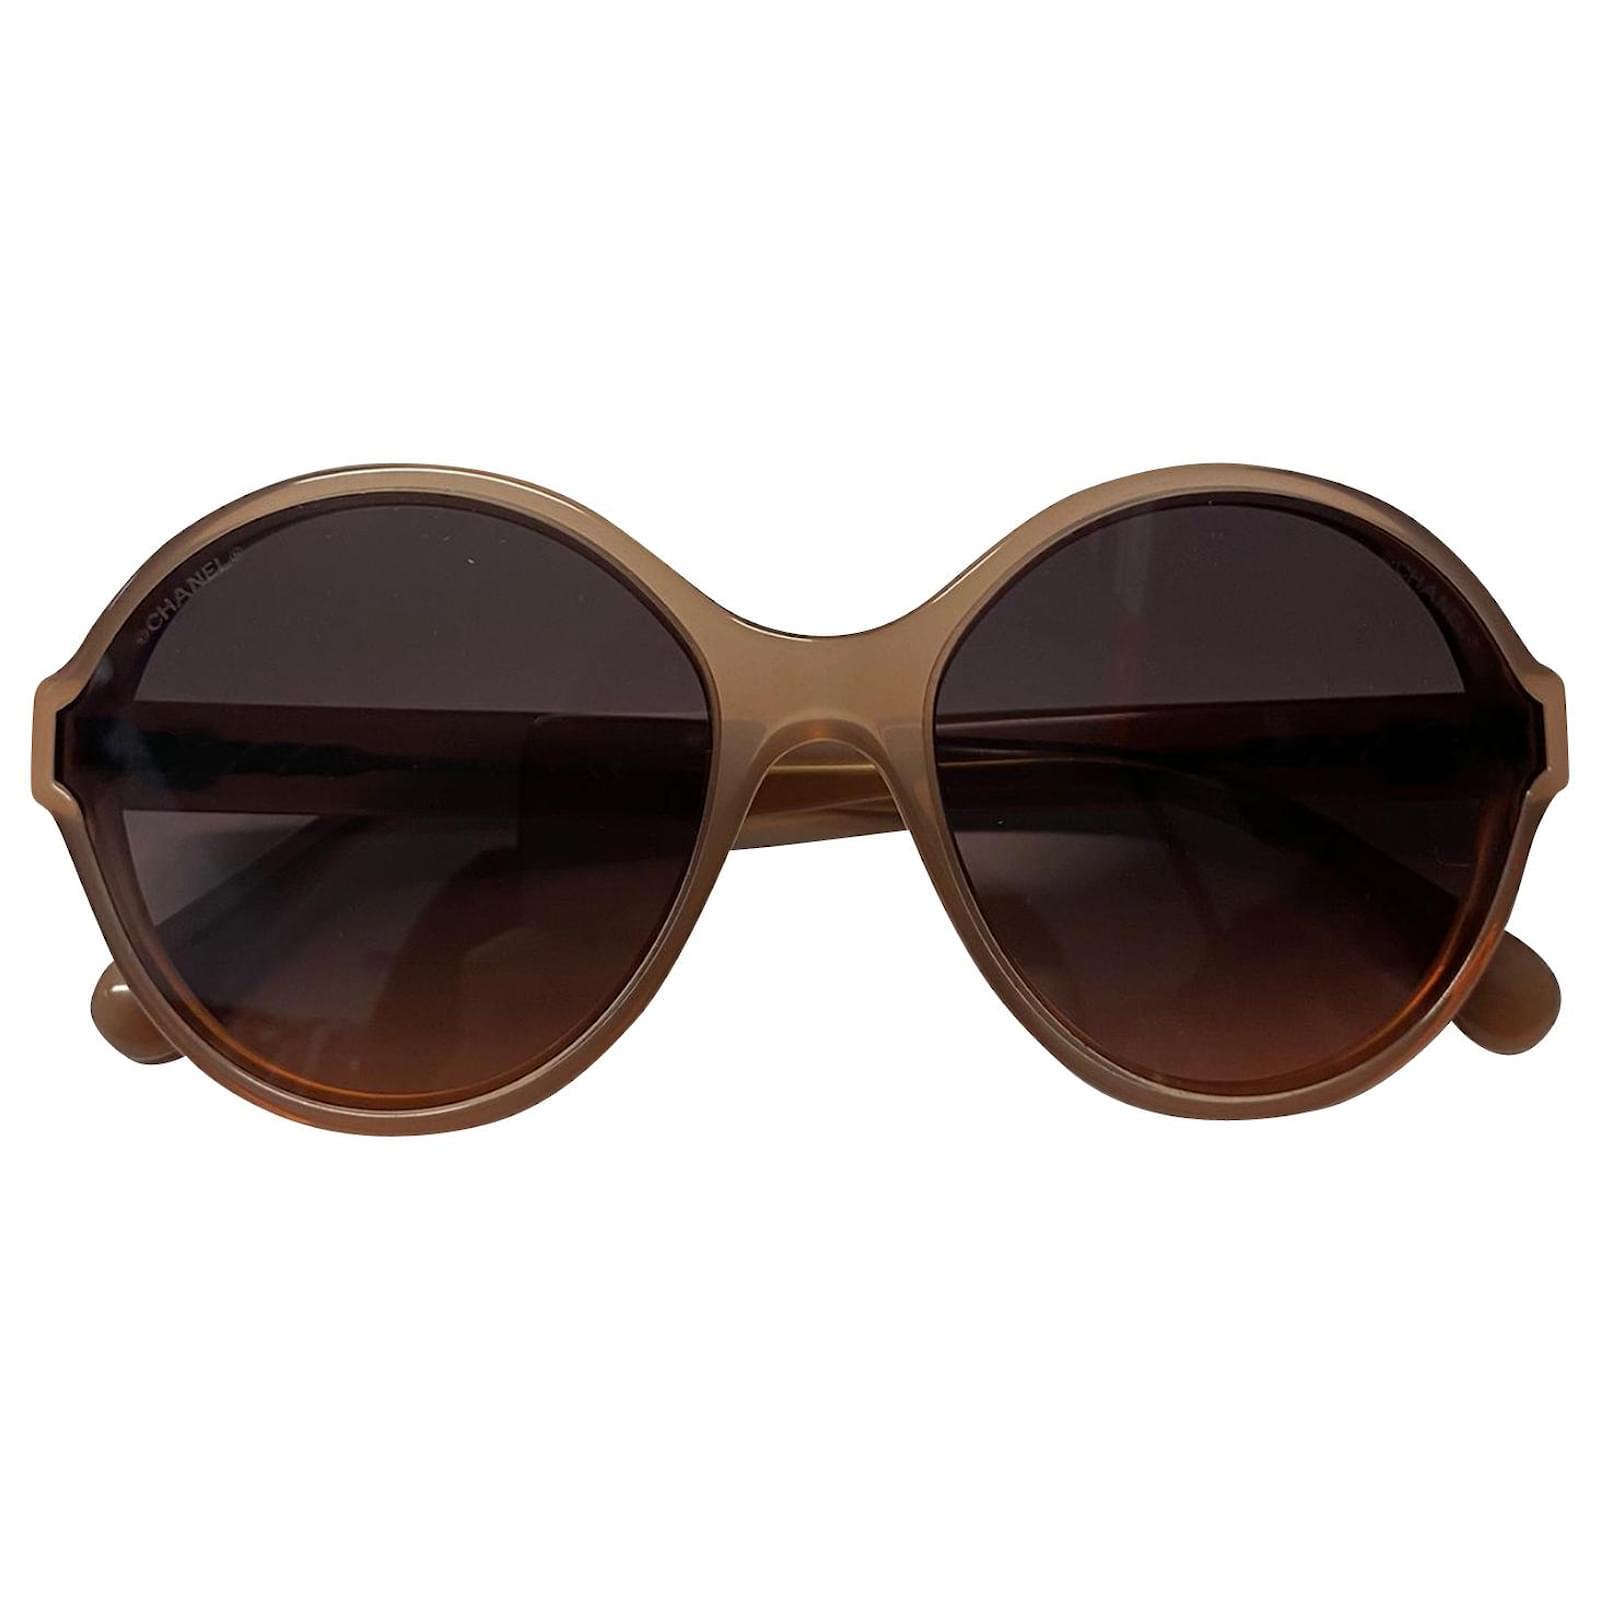 Chanel Interlocking CC Logo Round Sunglasses in Brown Acetate